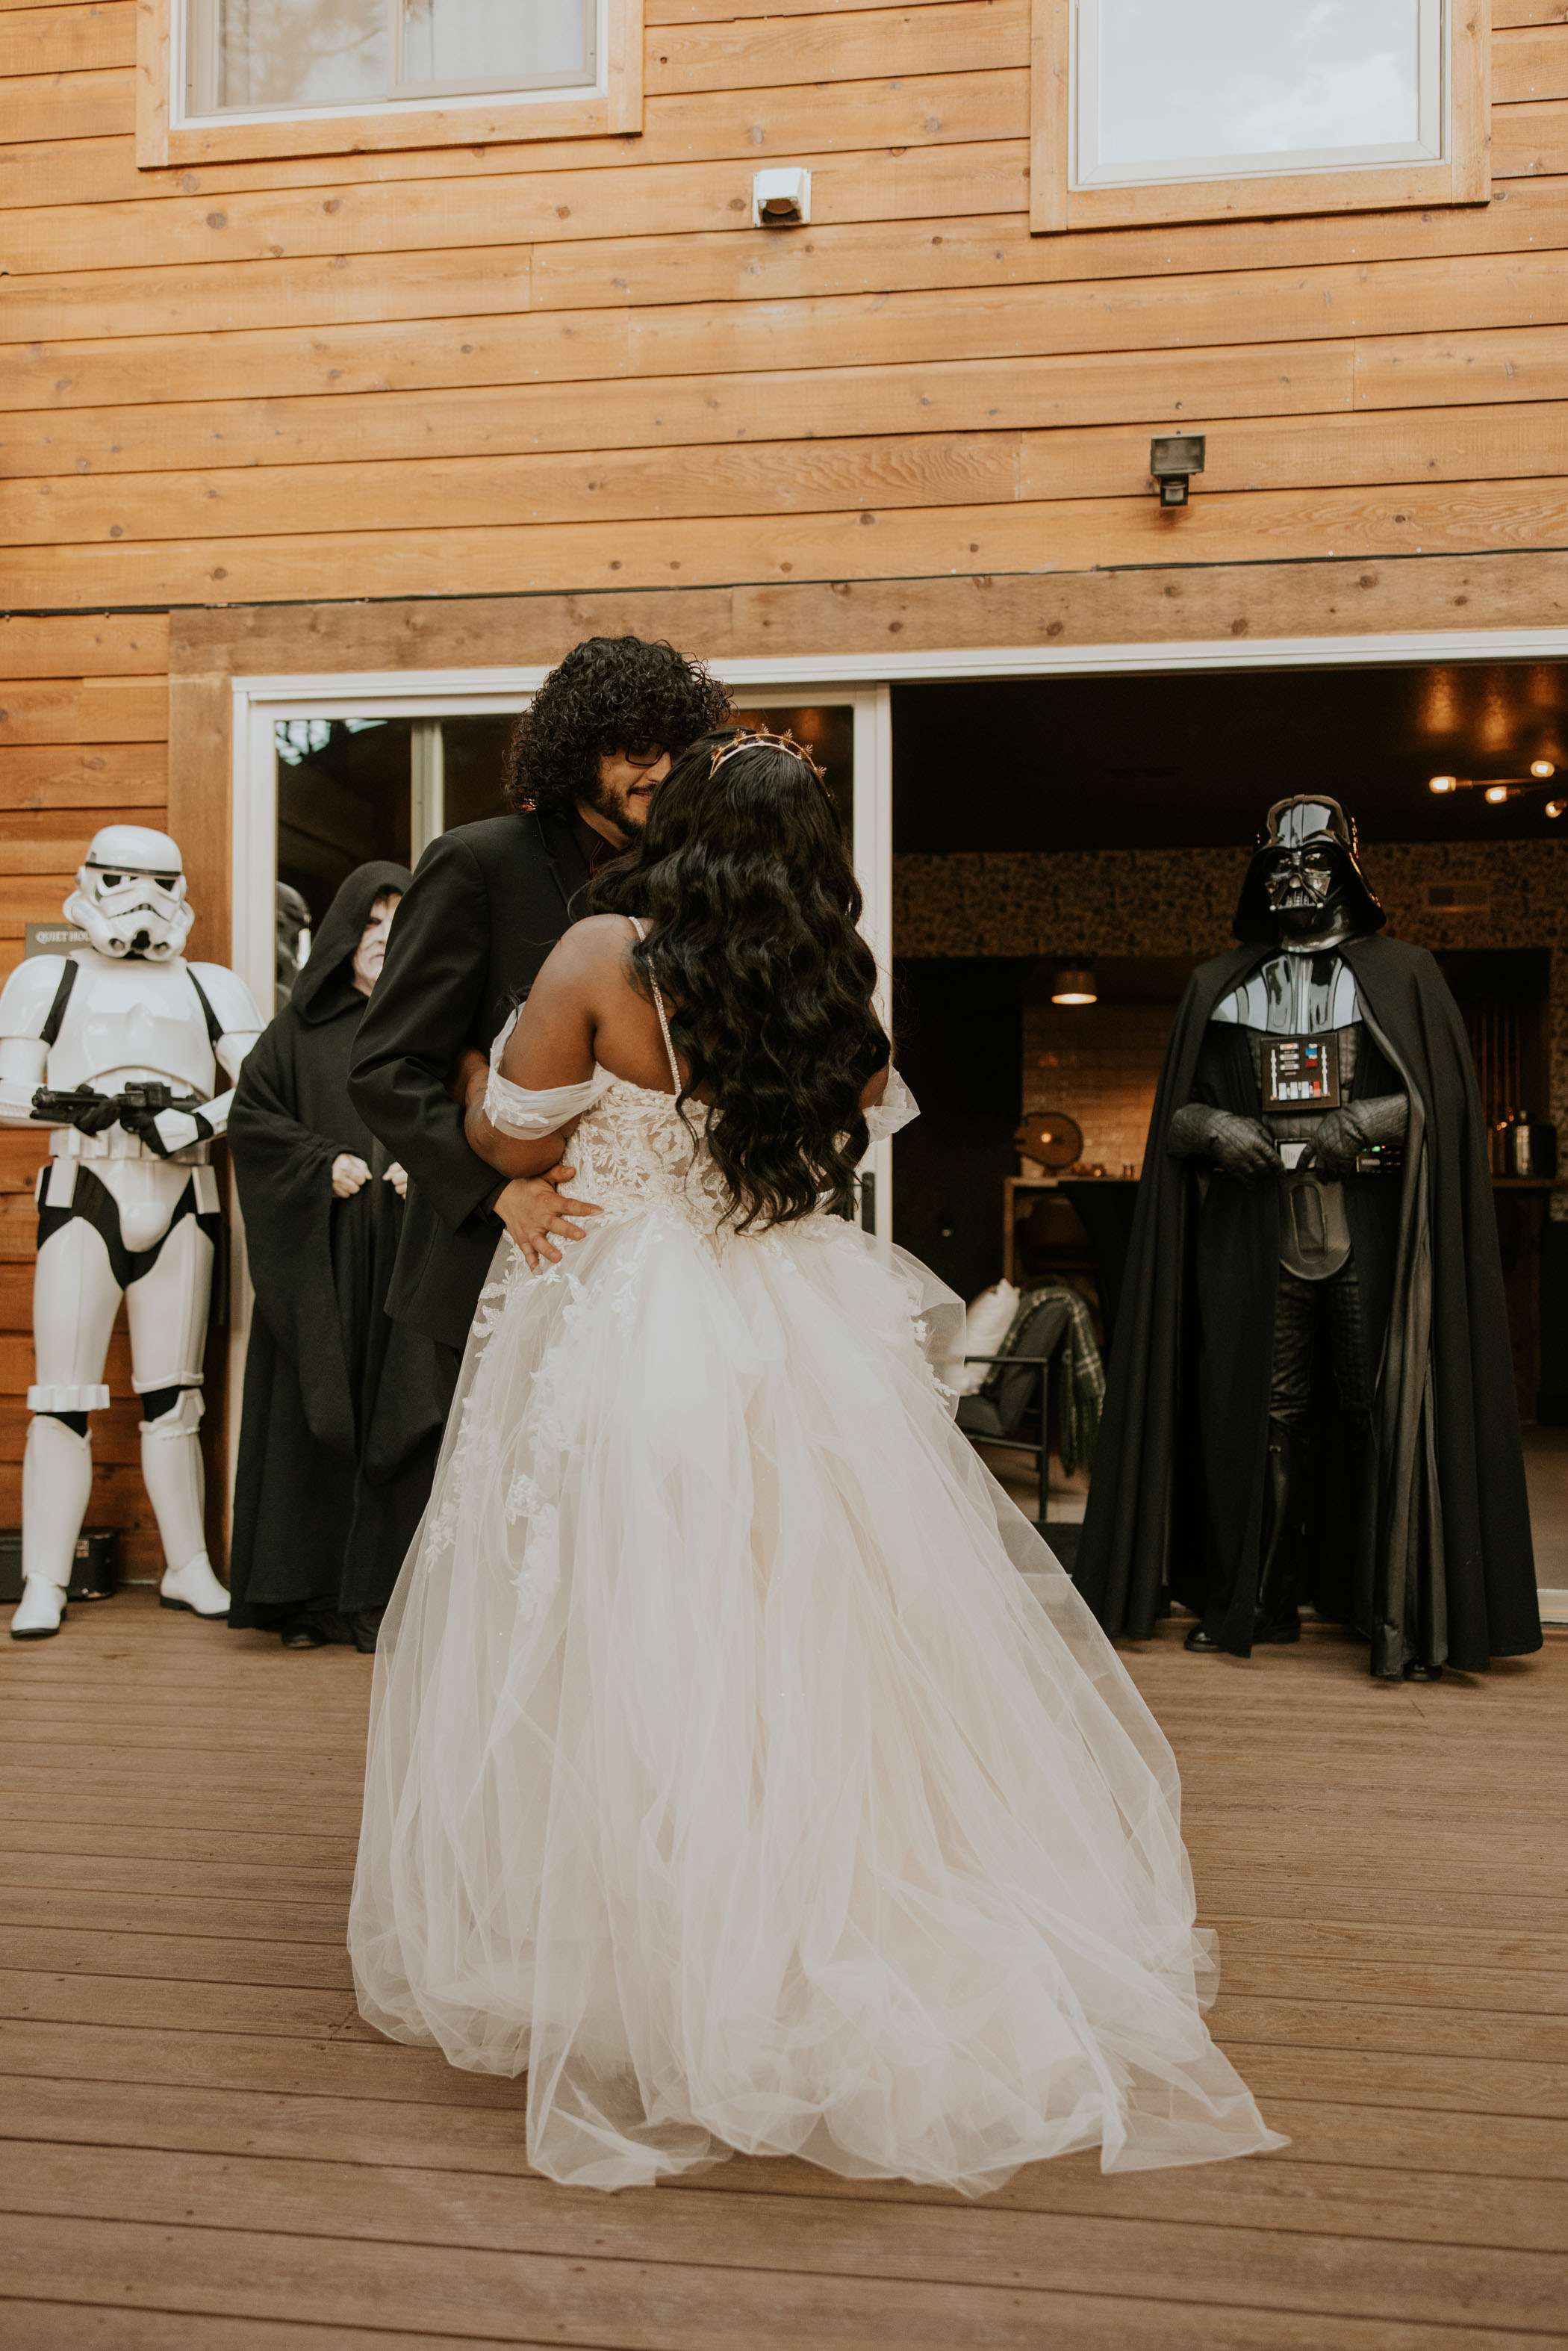 Romantic Star Wars Wedding in Evergreen Colorado